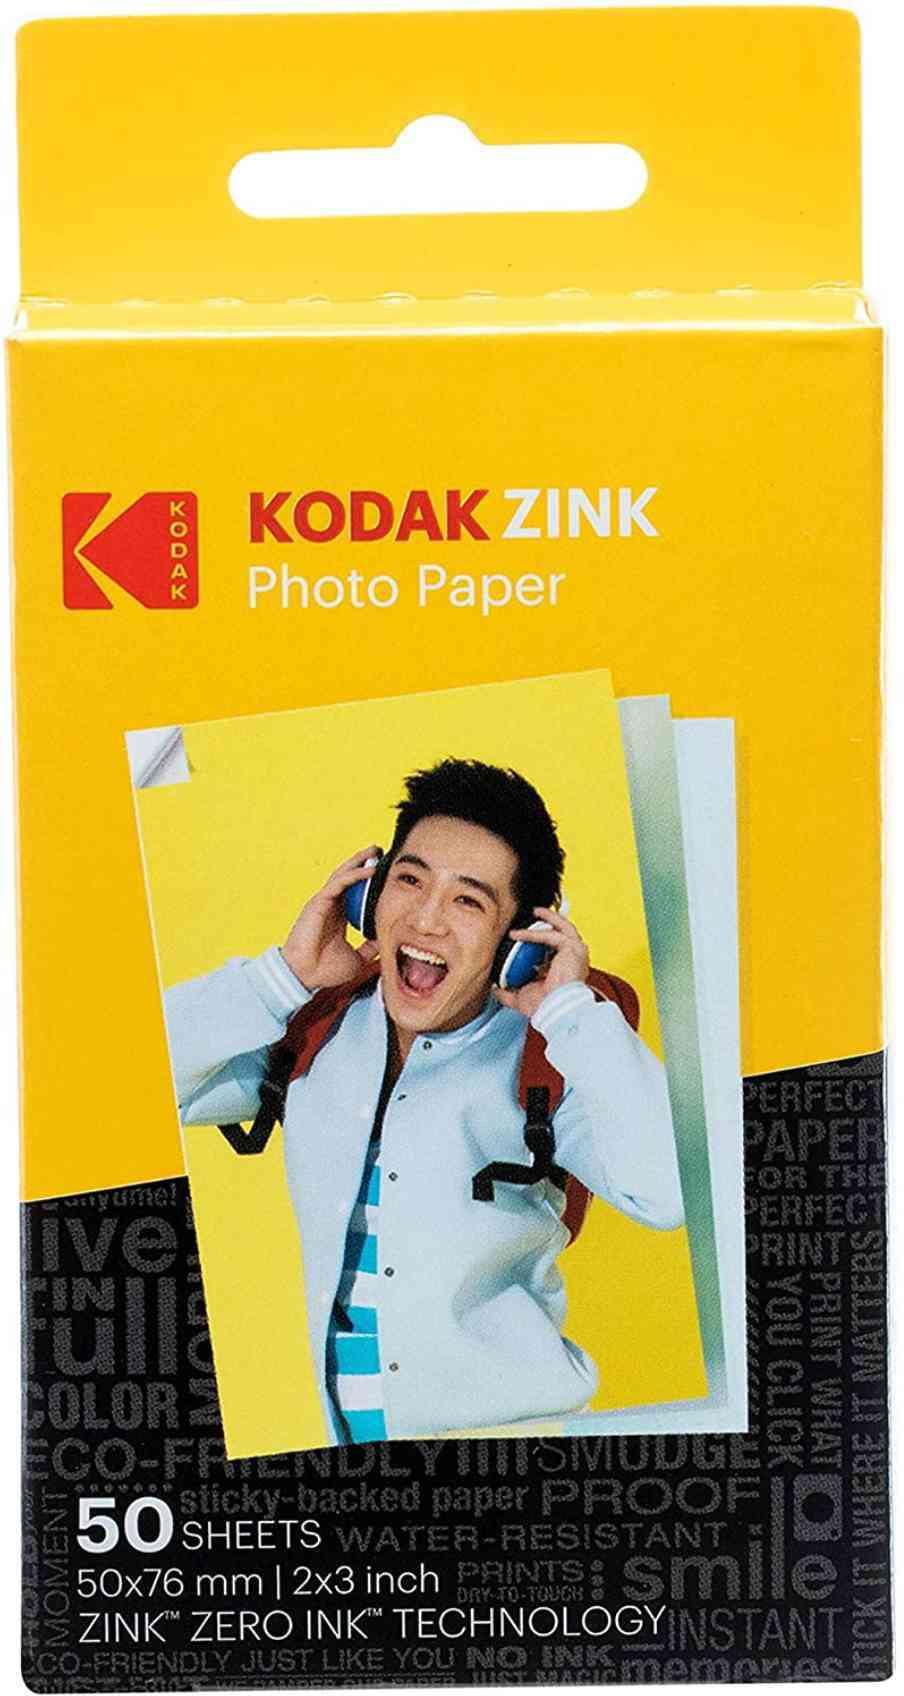 Kodak Zink Photo Paper 50 Sheets